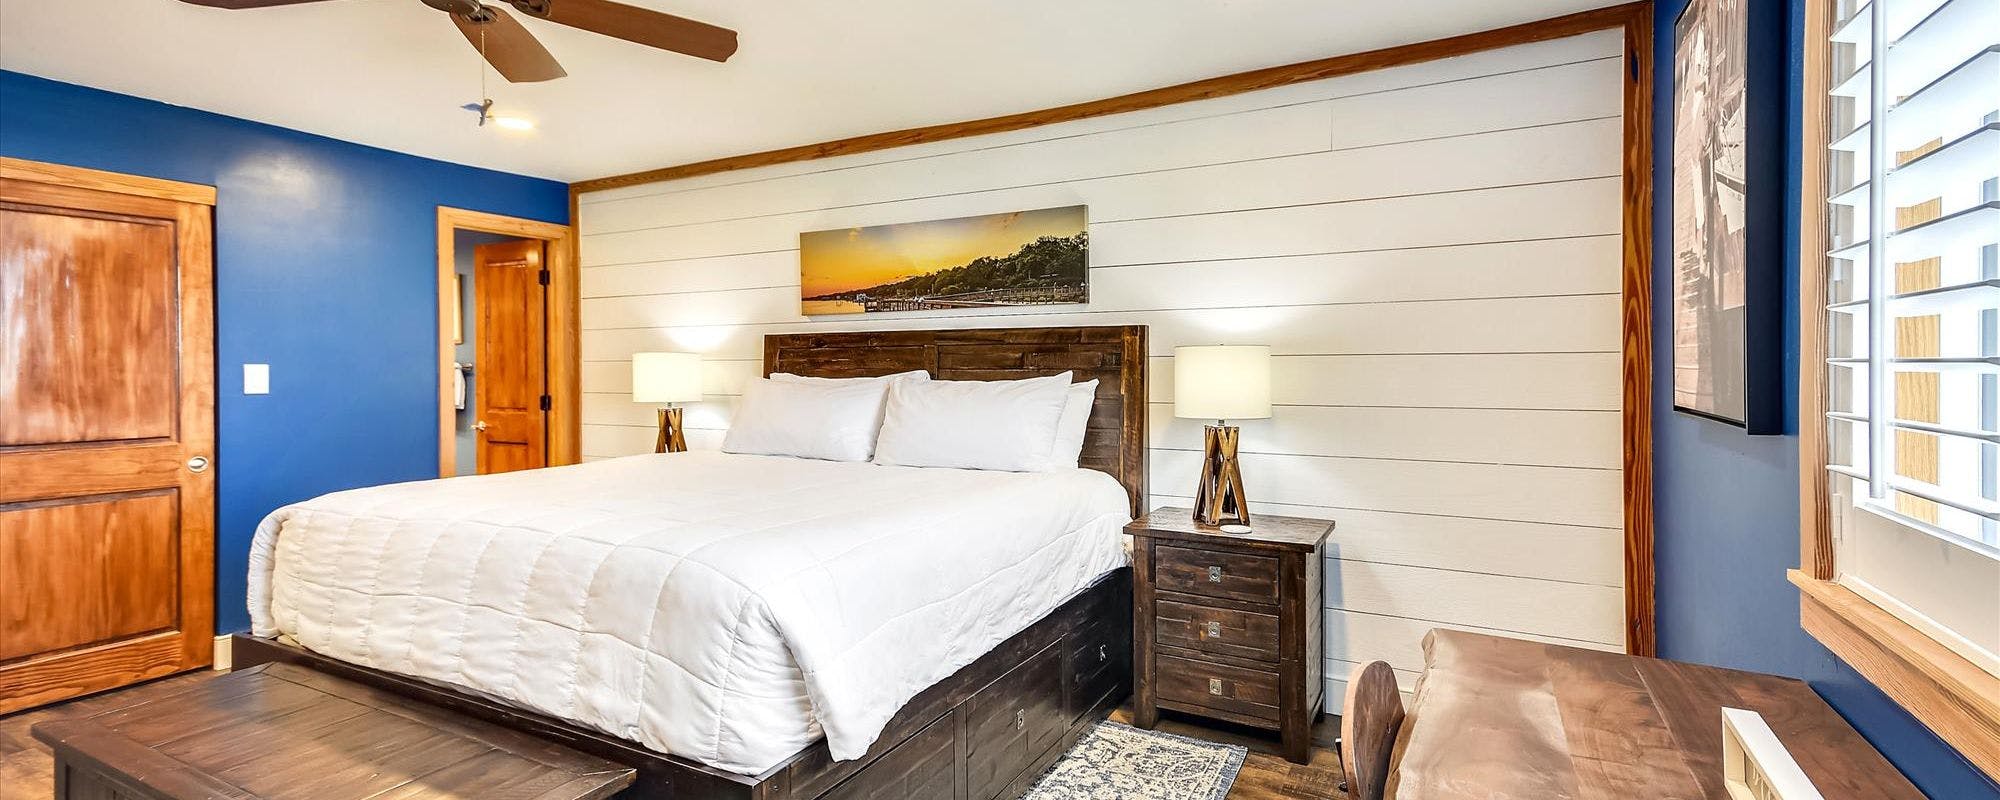 Coastal themed bedroom in Destin vacation rental